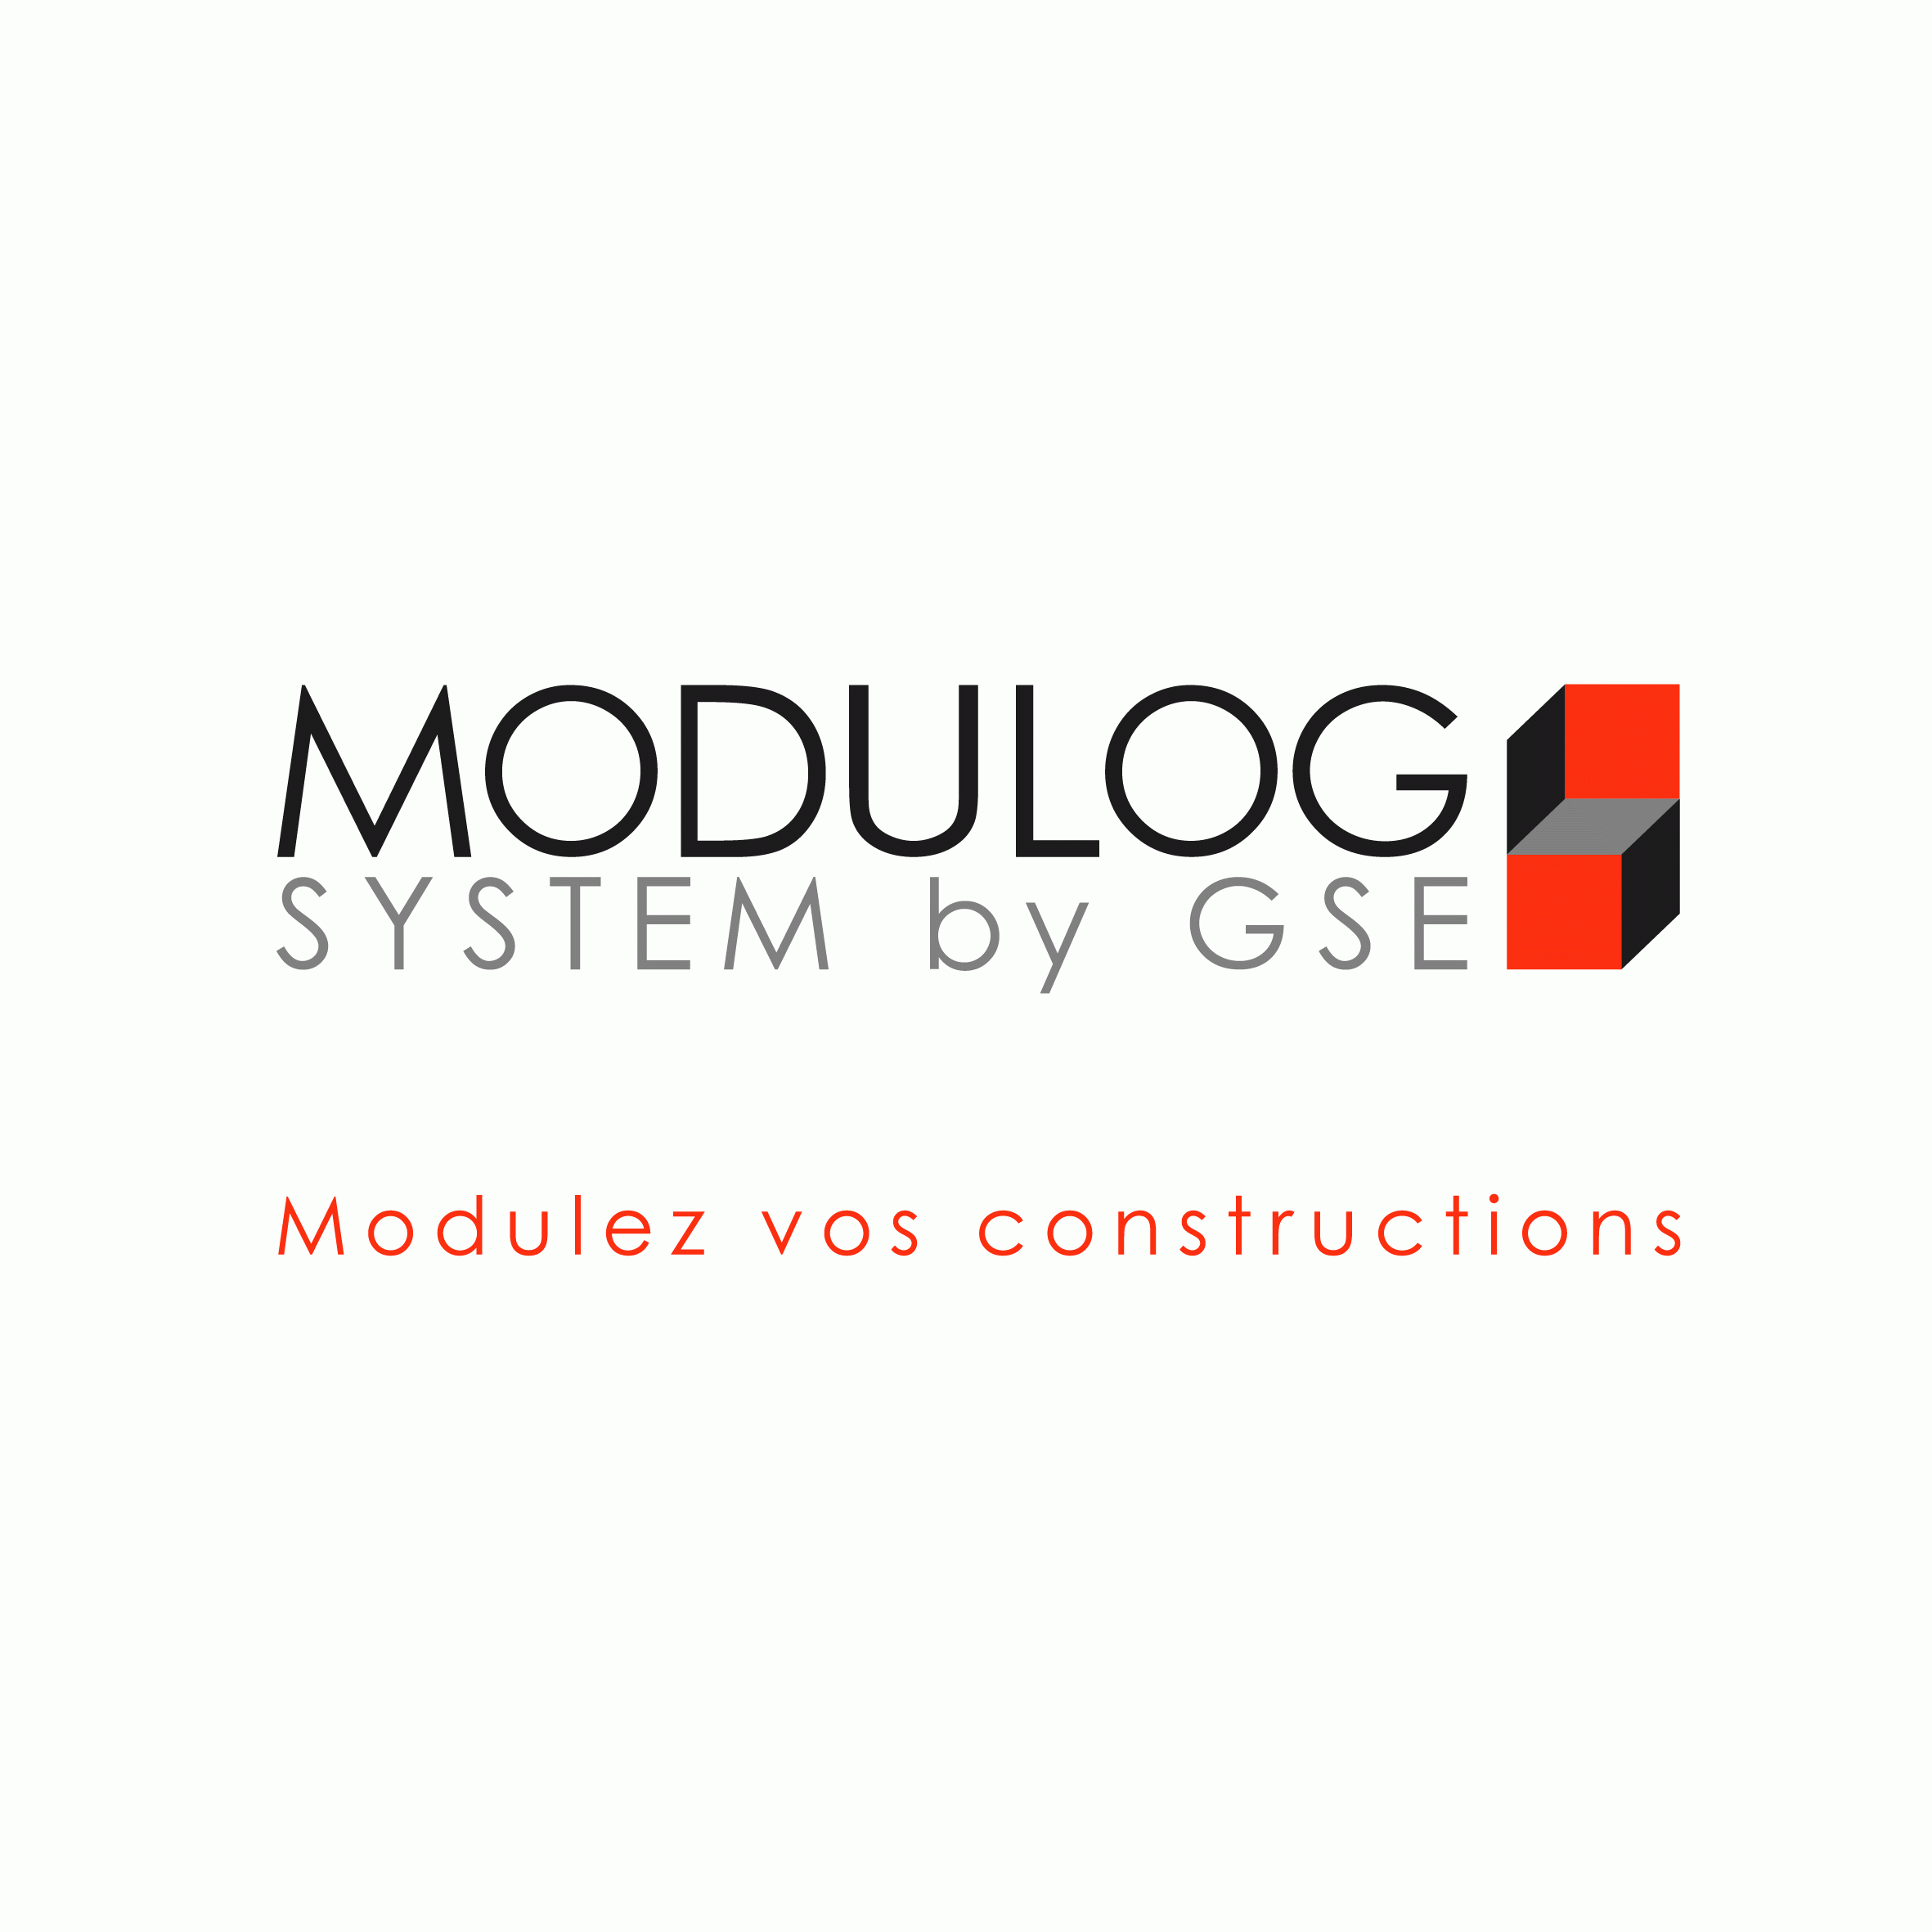 Modulog System by GSE